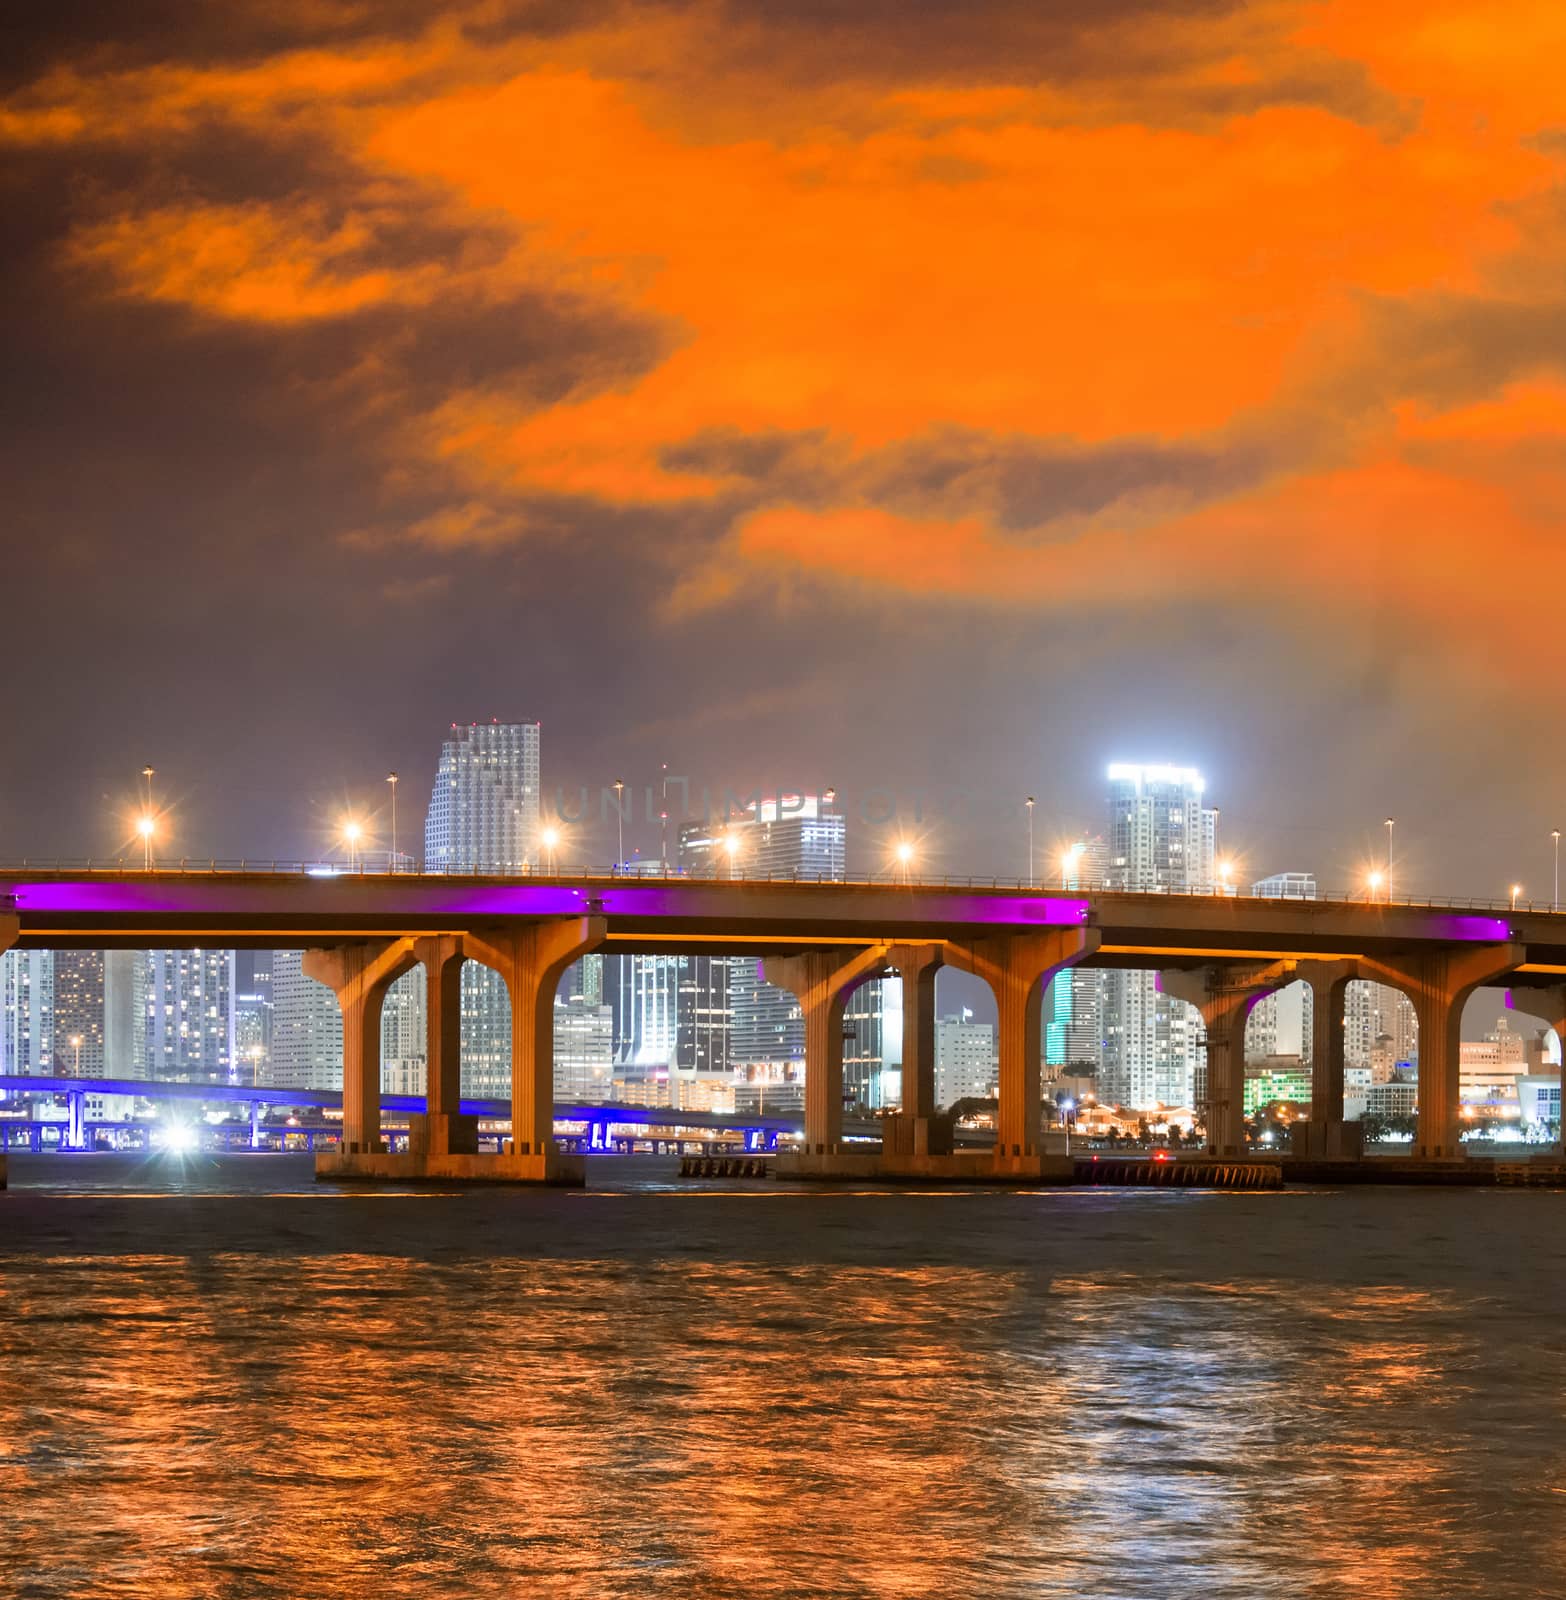 Sunset sky over Miami Bridge.